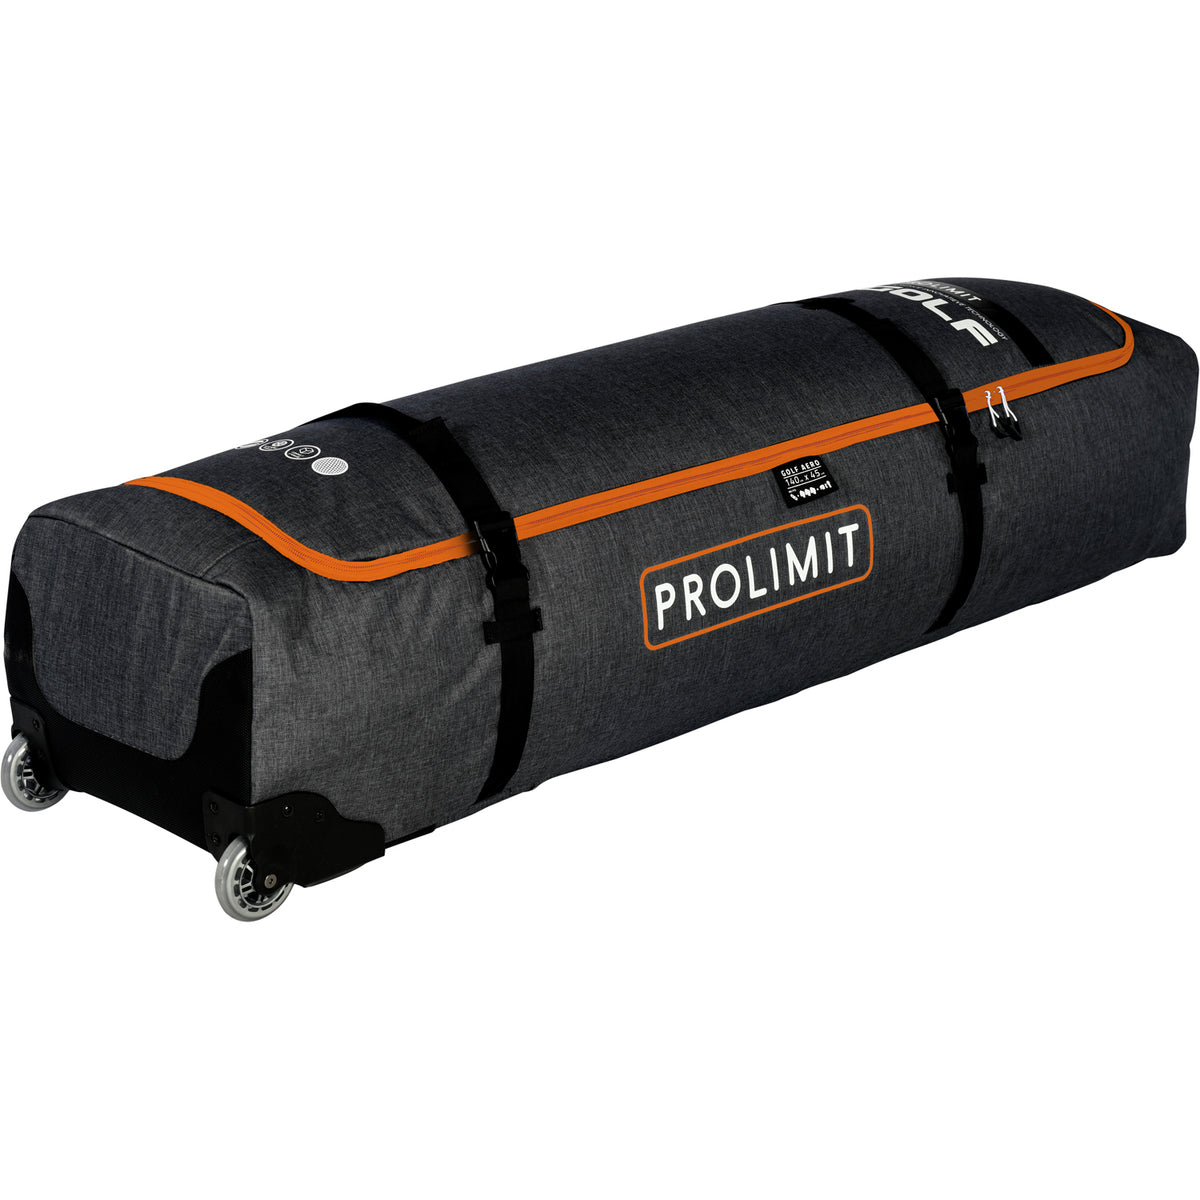 PROLIMIT KITE BOARD BAG GOLF AERO WHEELED VARIO ORANGE/BLACK travel bag